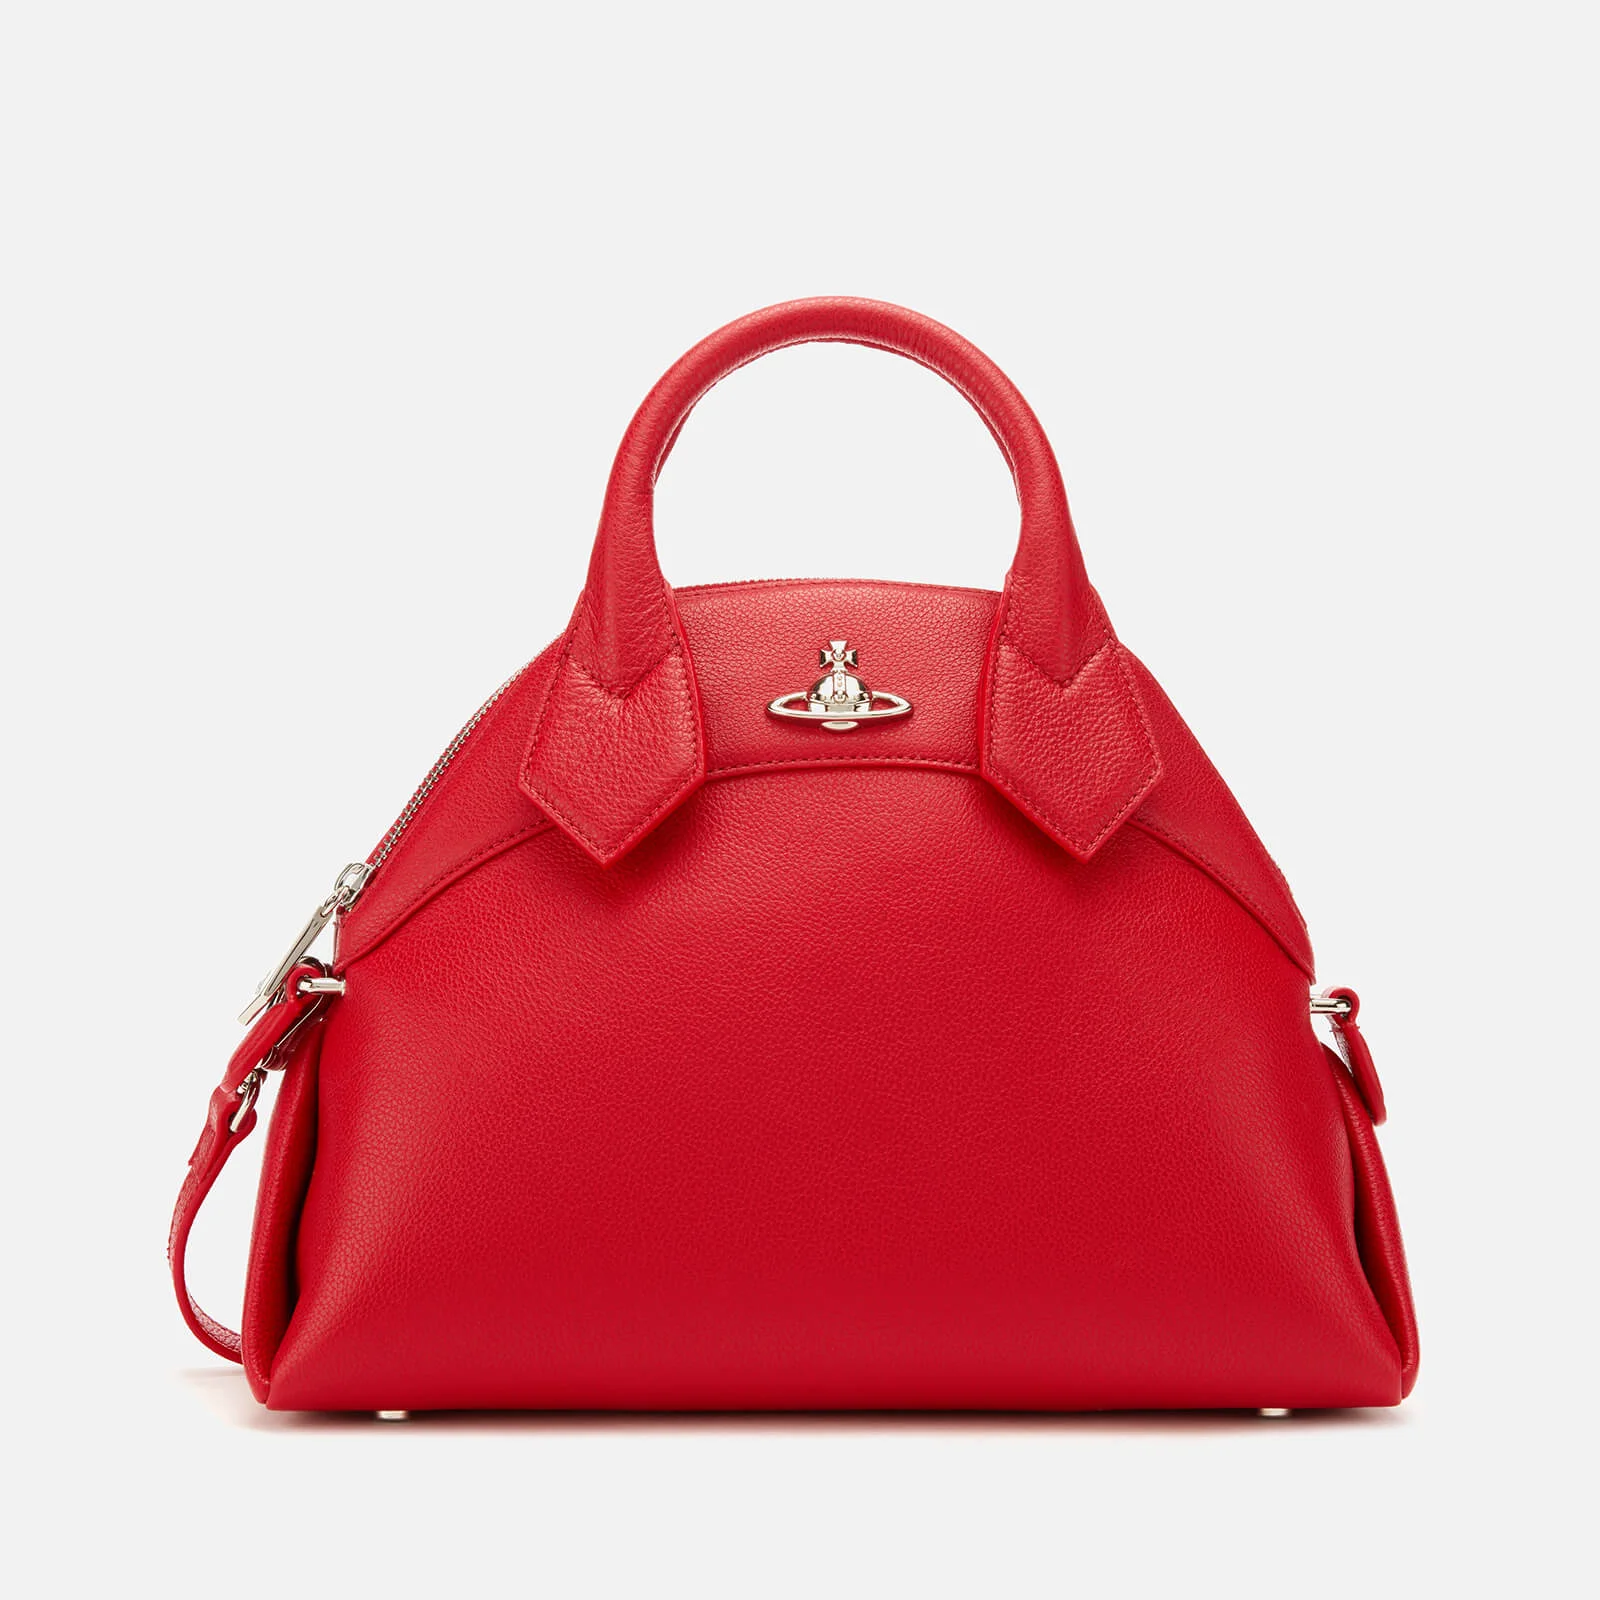 Vivienne Westwood Women's Windsor Small Handbag - Red Image 1